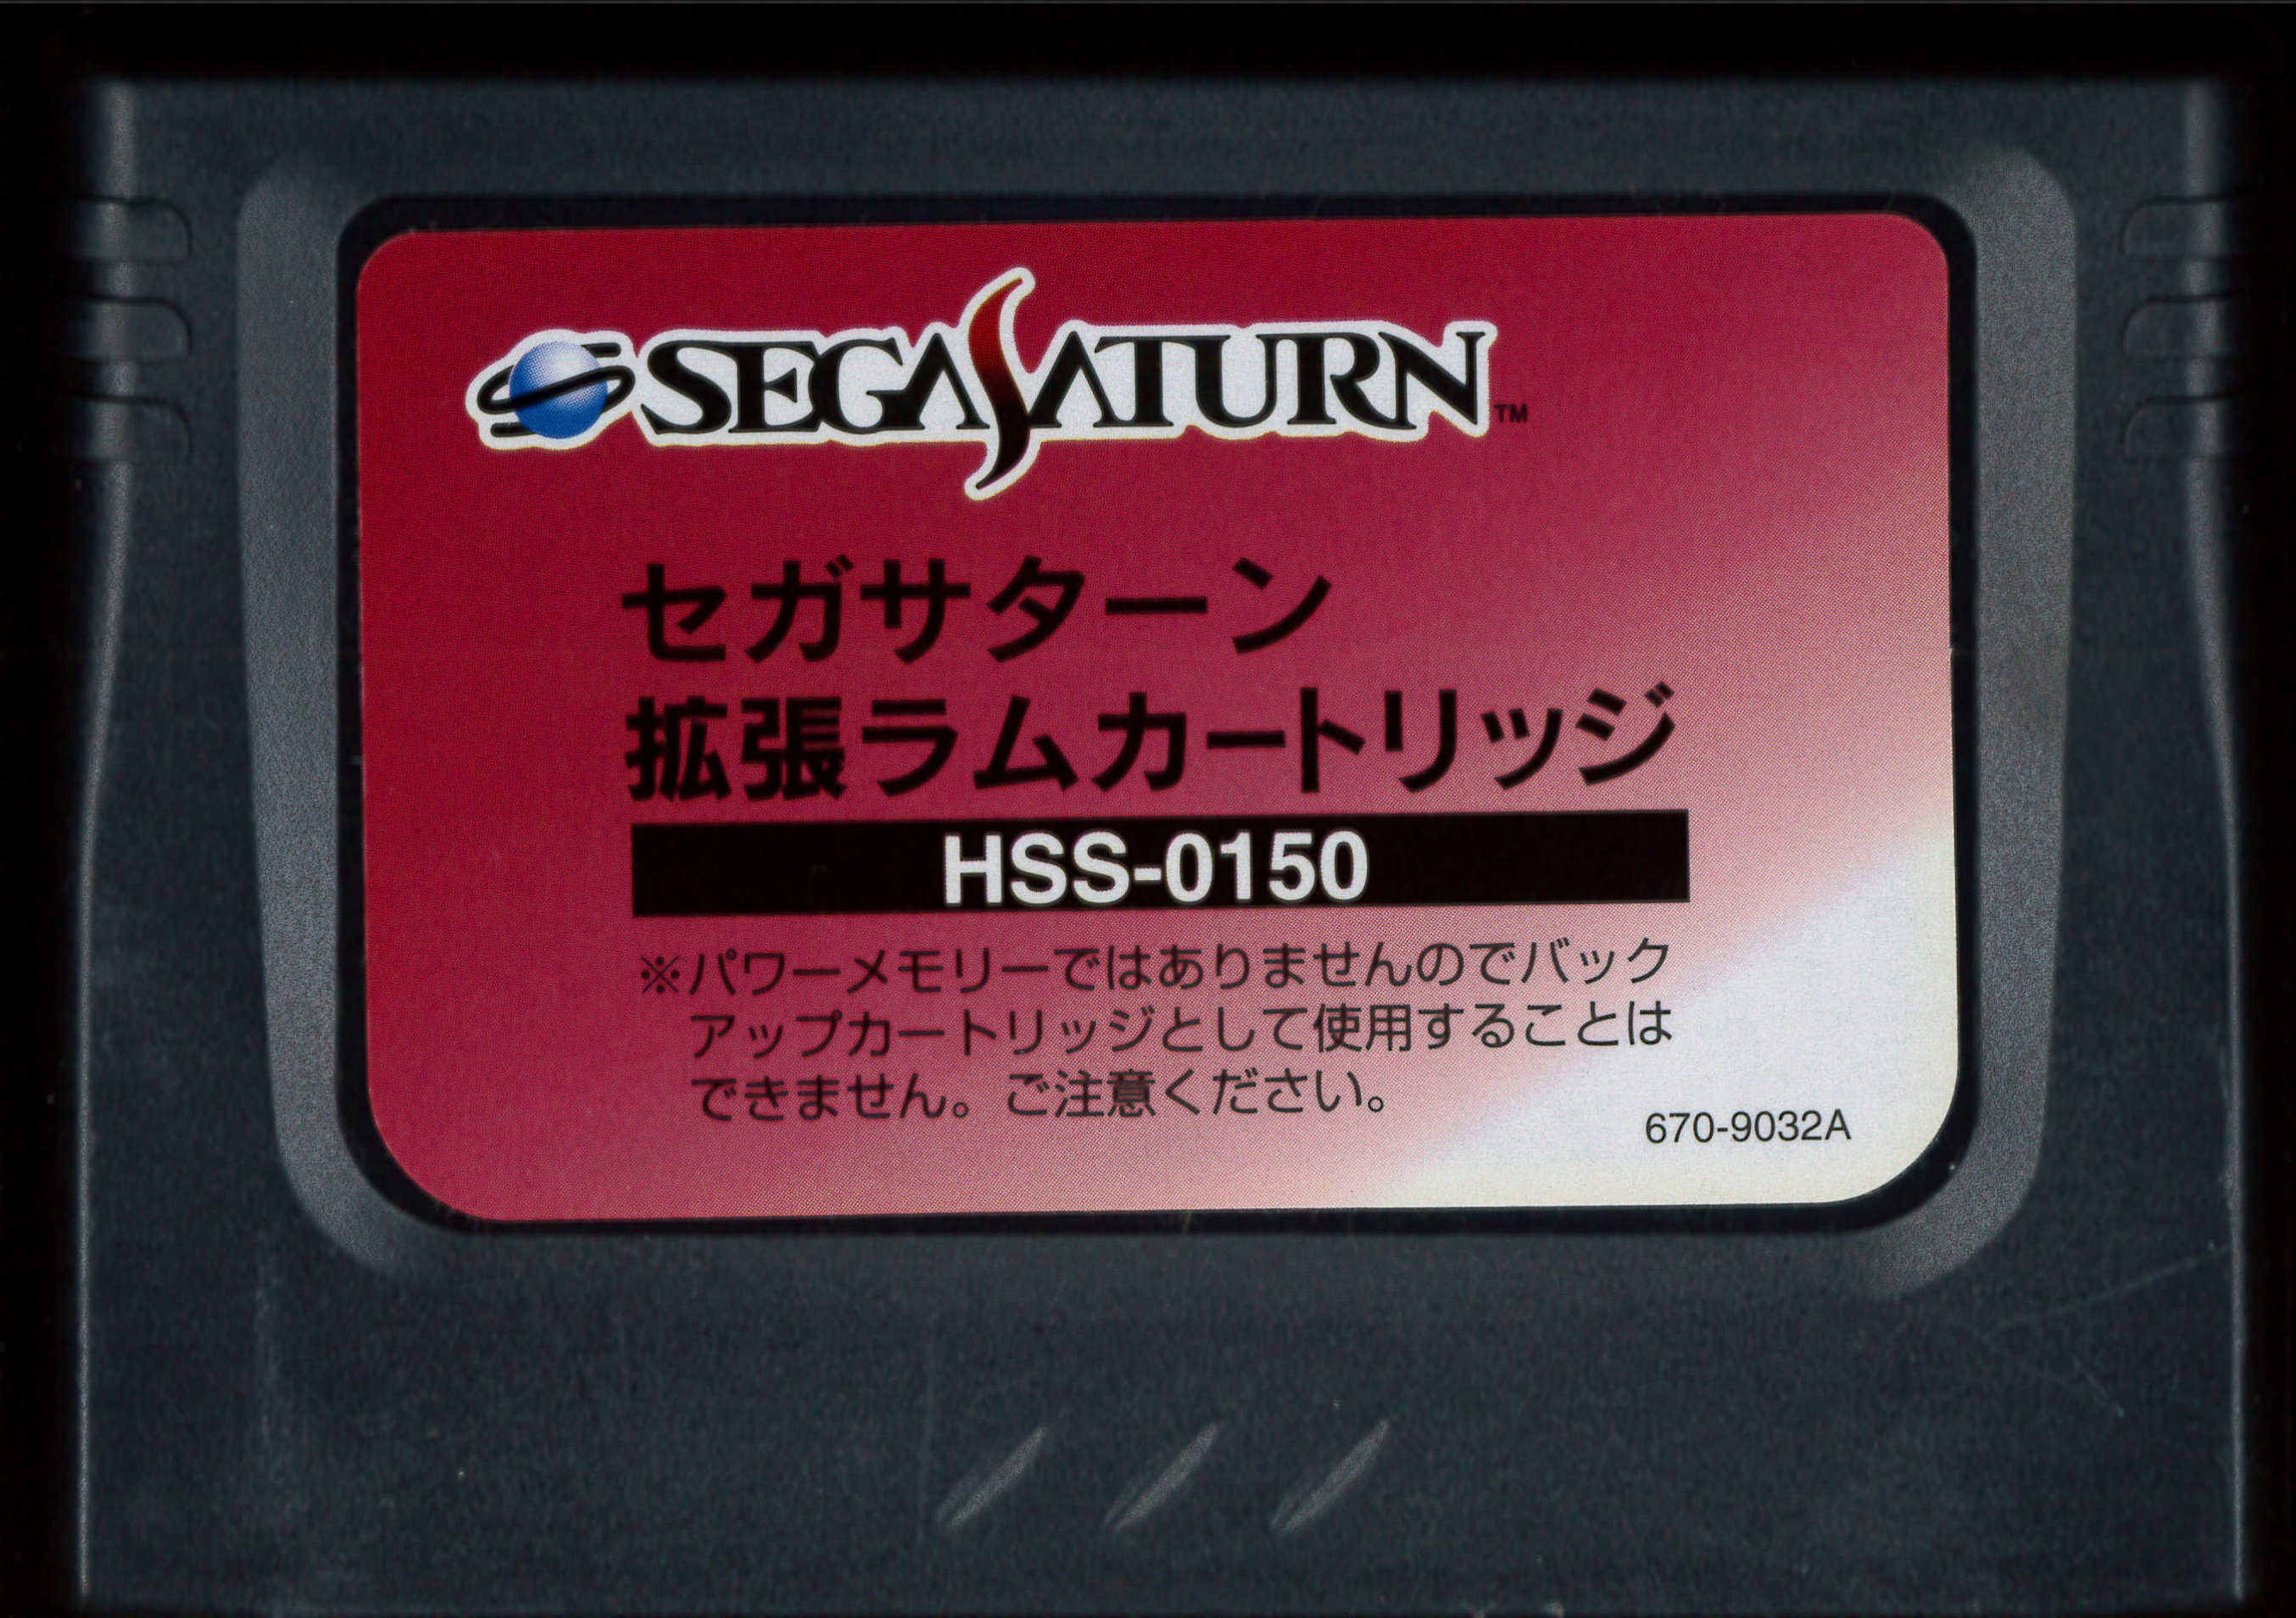 Saturn_HSS-0150.jpg